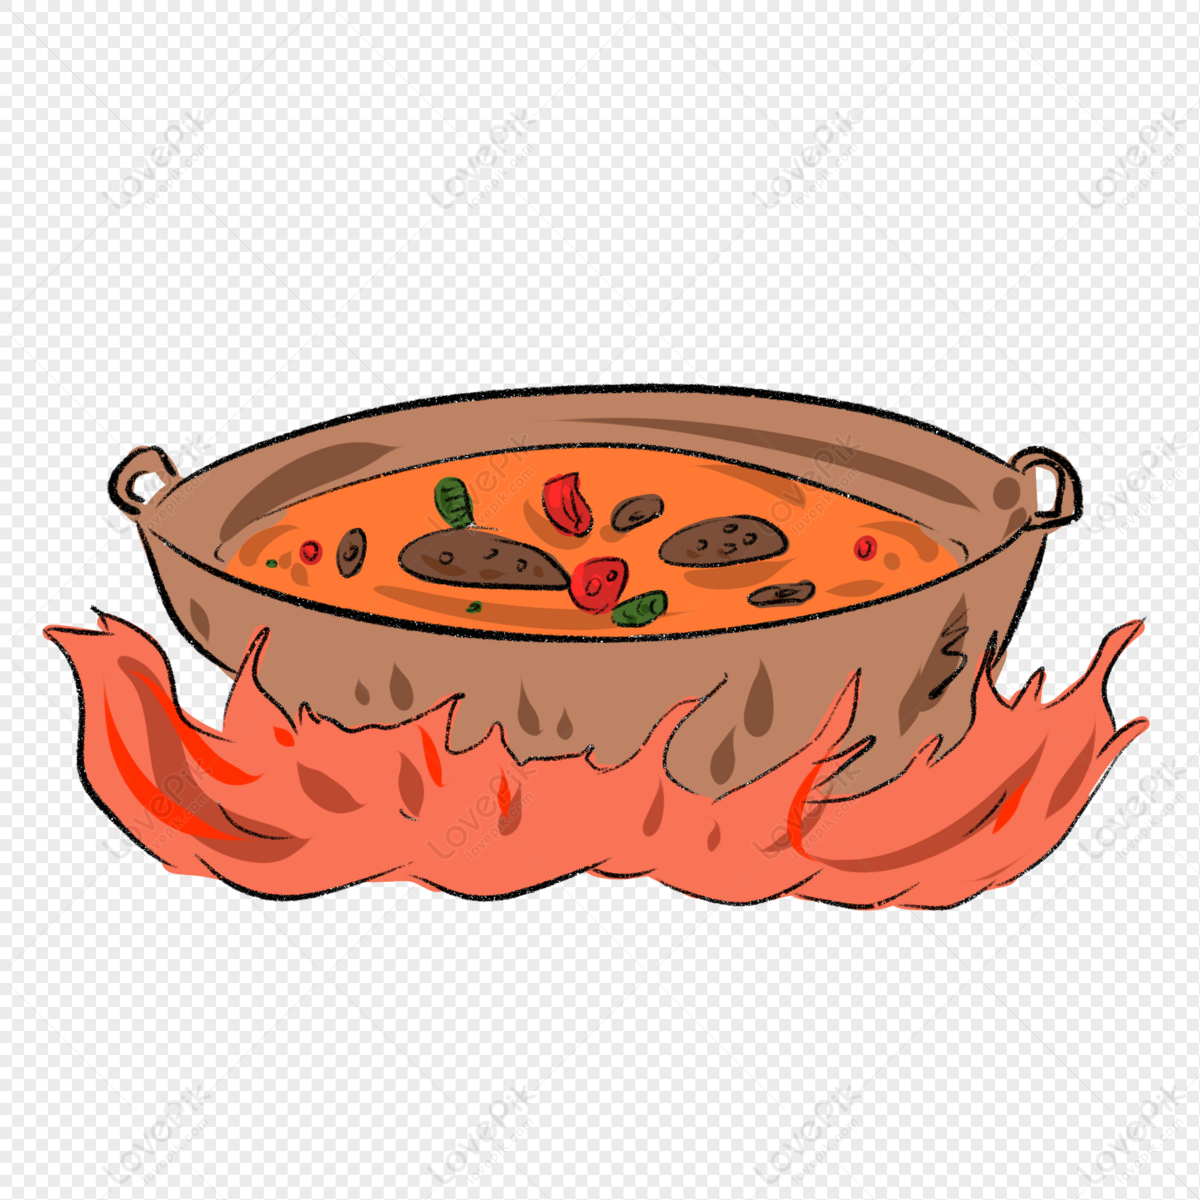 Hot Pot PNG Transparent, Self Heating Hot Pot Elements Hand Drawn Cartoon Hot  Pot, Self Heating Hot Pot, Small Hot Pot, Since The Pot PNG Image For Free  Download